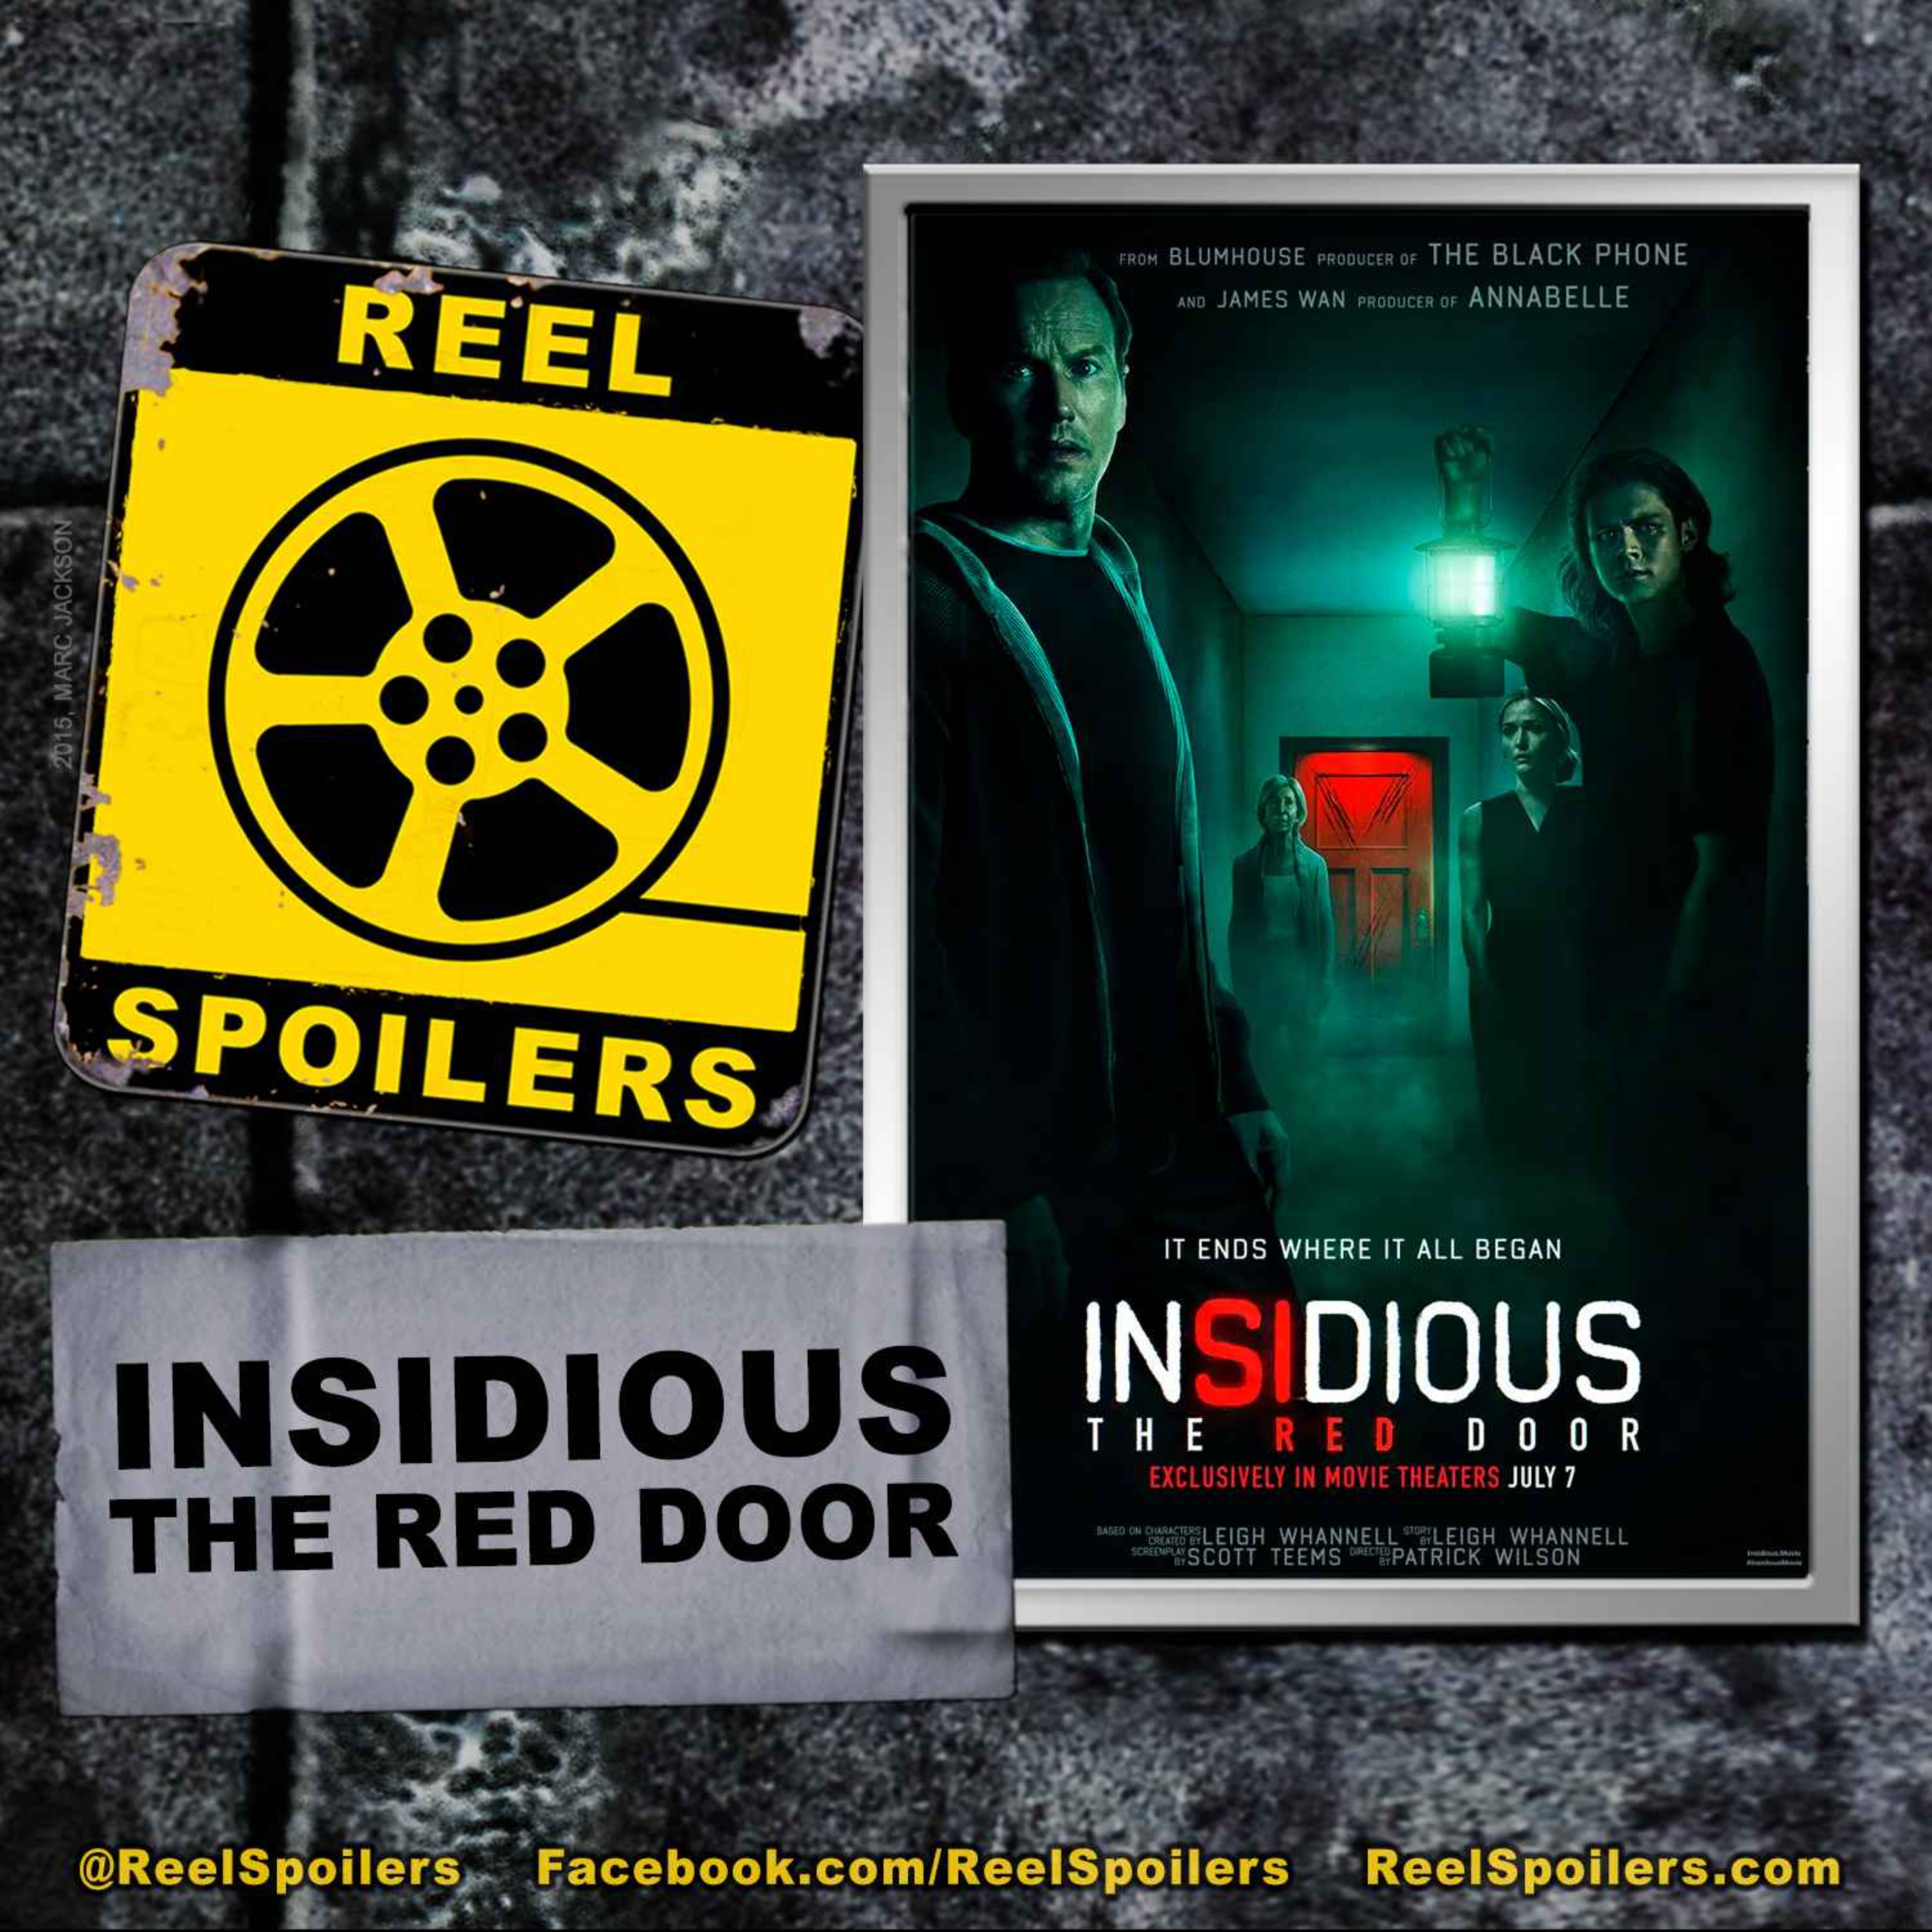 INSIDIOUS: THE RED DOOR Starring Patrick Wilson, Ty Simpkins, Lin Shaye